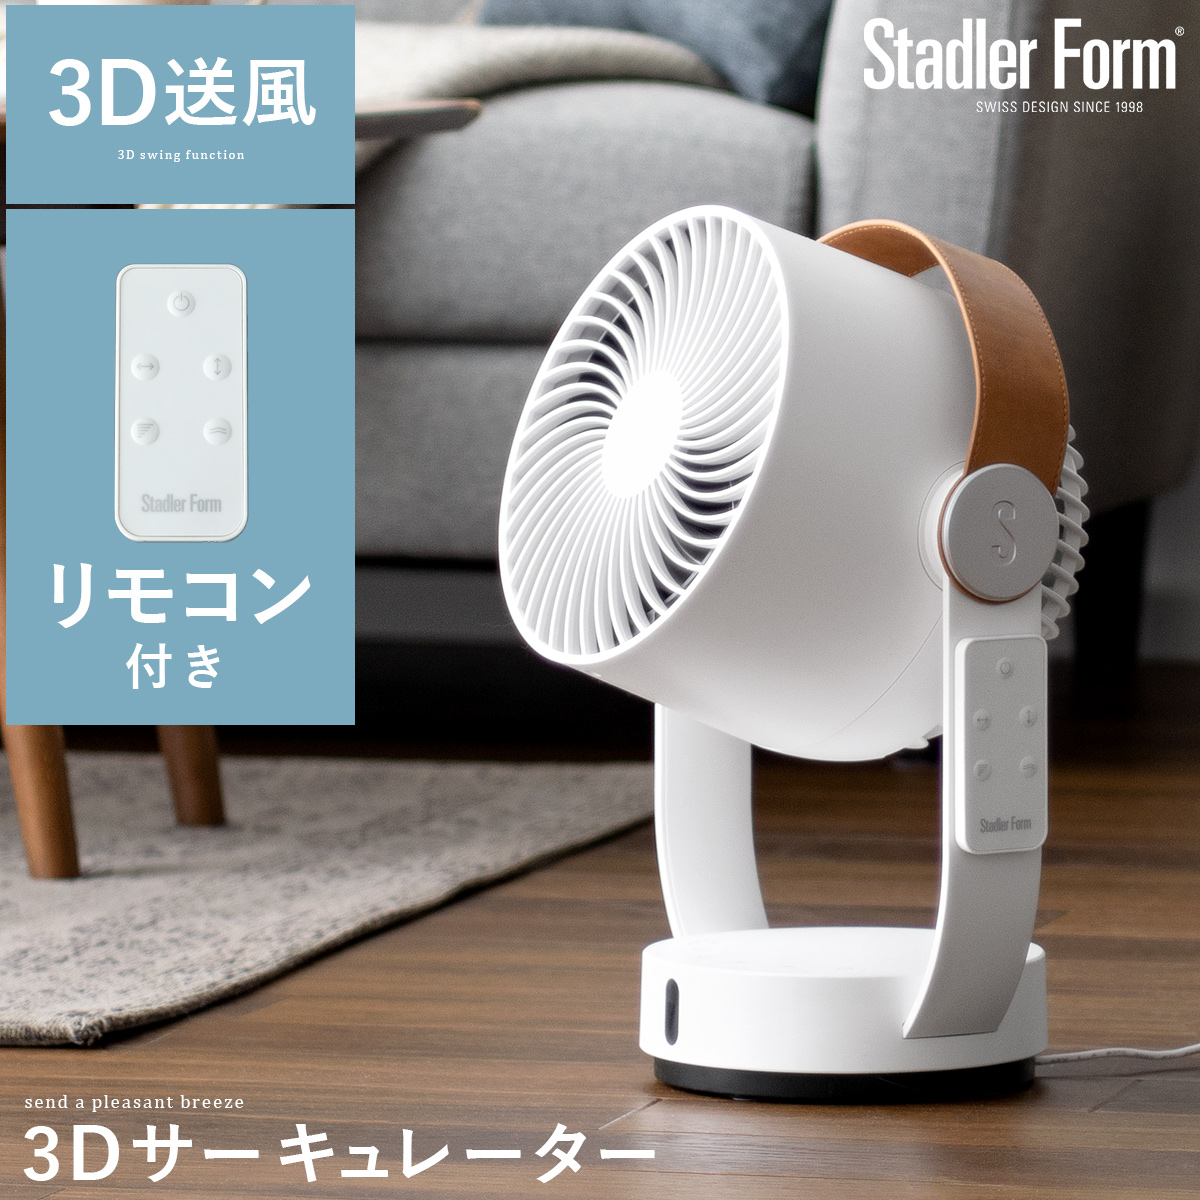 Stadler Form(スタドラフォーム) 3Dサーキュレーター Leo(レオ 